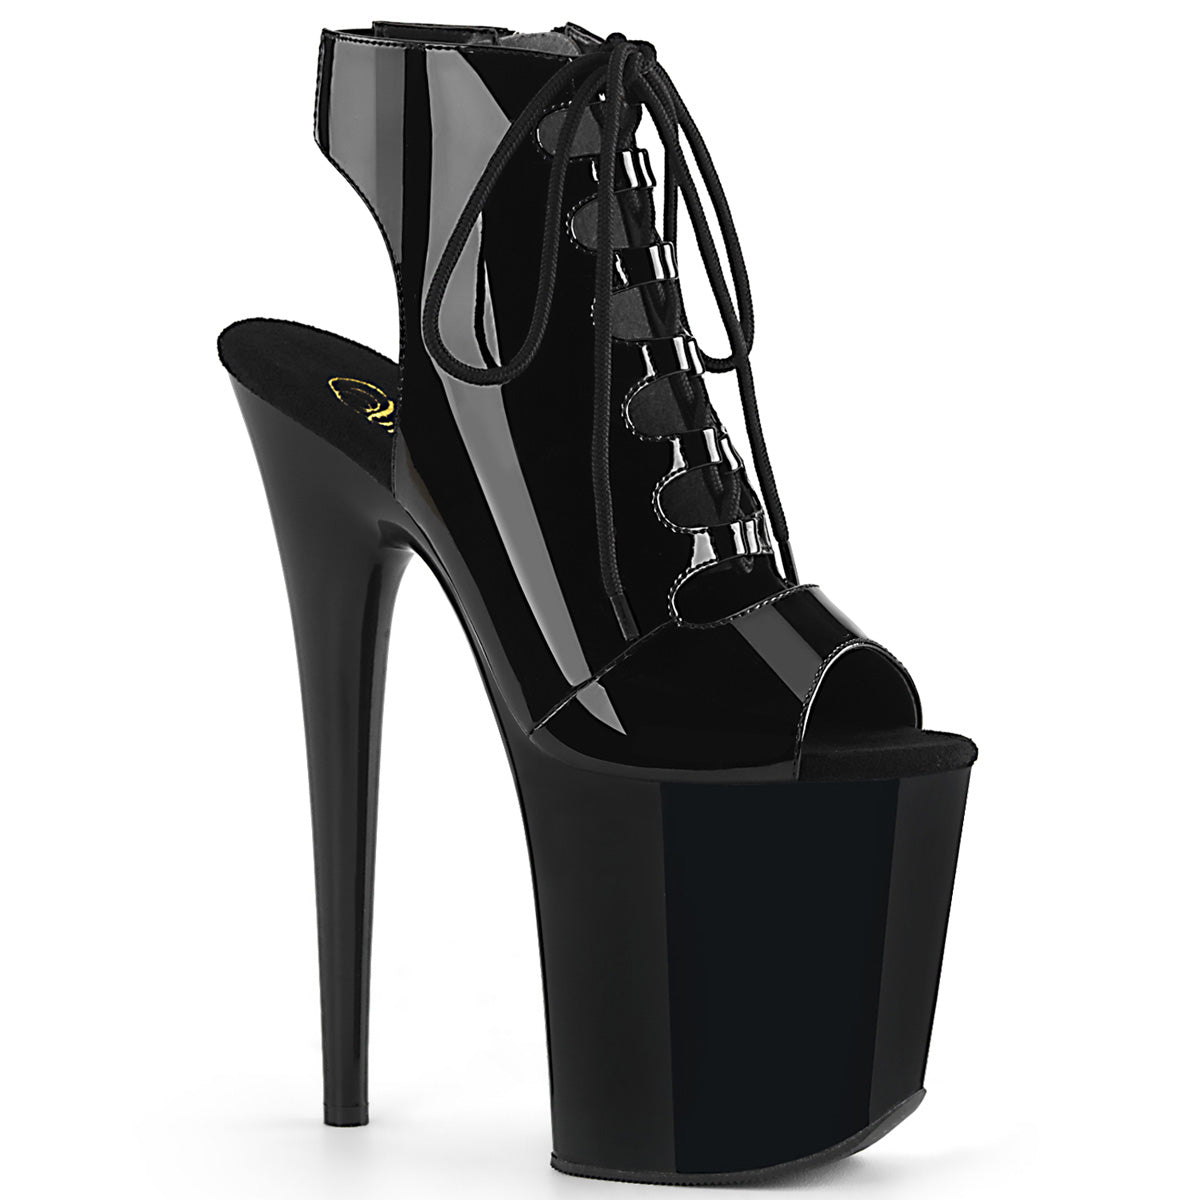 FLAMINGO-800-20 8" Heel Black Patent  Stripper Platforms High Heels